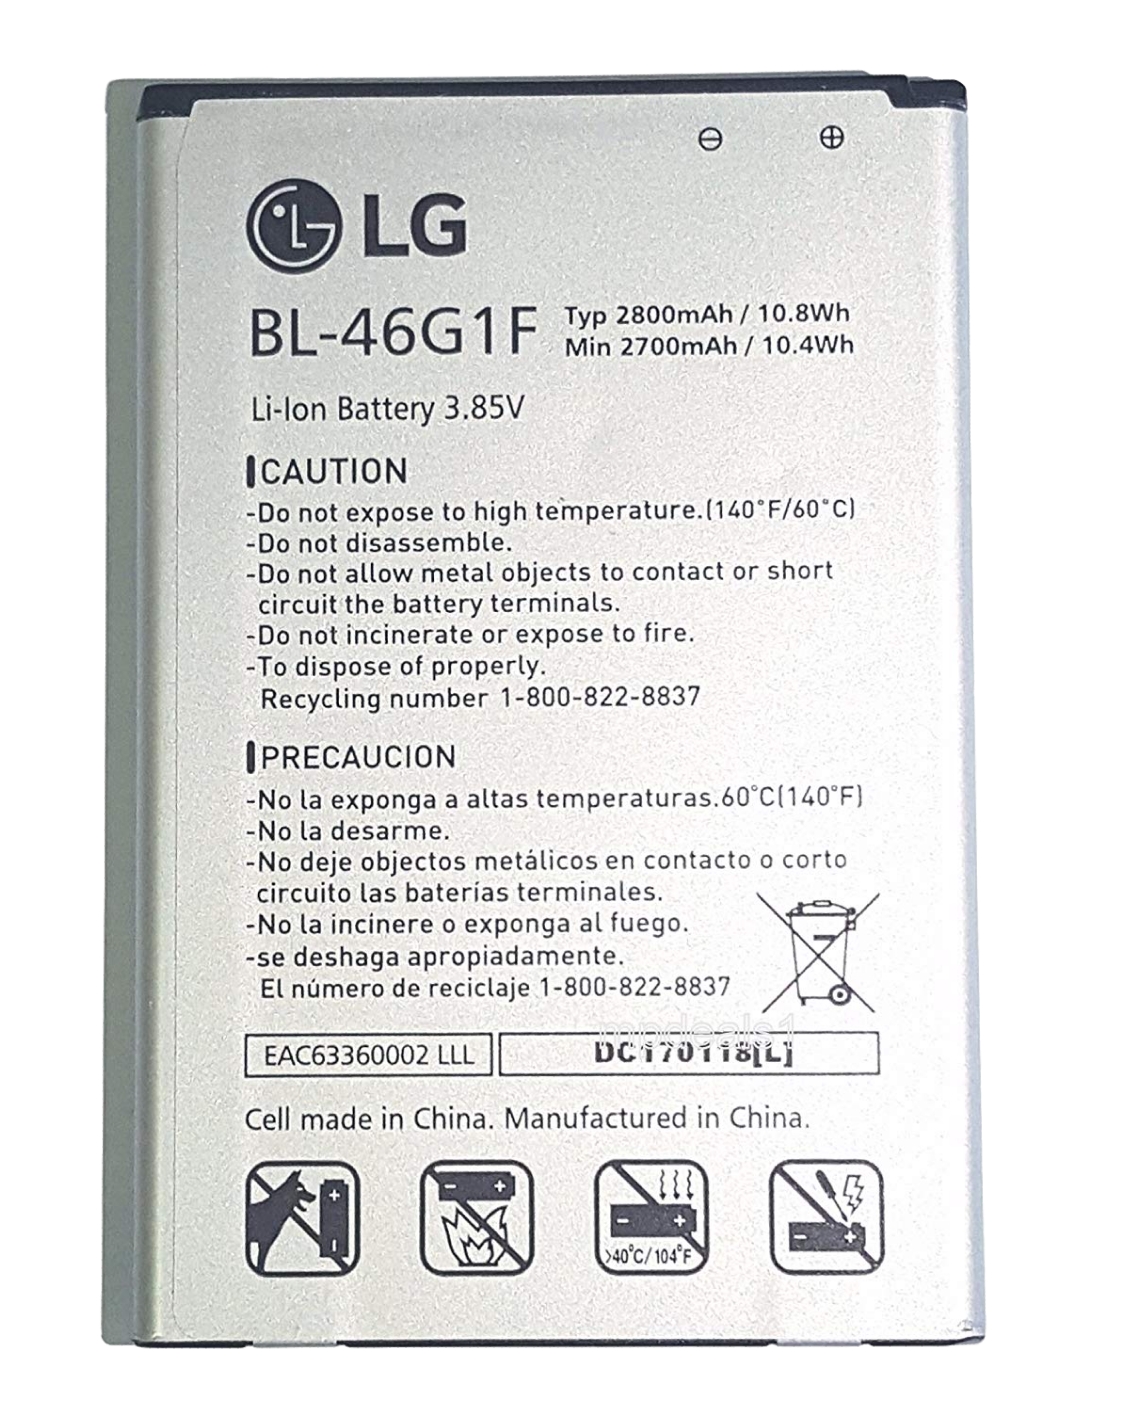 LG OEM Original Cell Phone Battery BL-46G1F Li-ion Battery 2700mAh 10.8Wh 3.85V EAC63418207 YBY For For LG 2017 K20 Plus K20, K20 V, Harmony, LV532GB - image 1 of 2